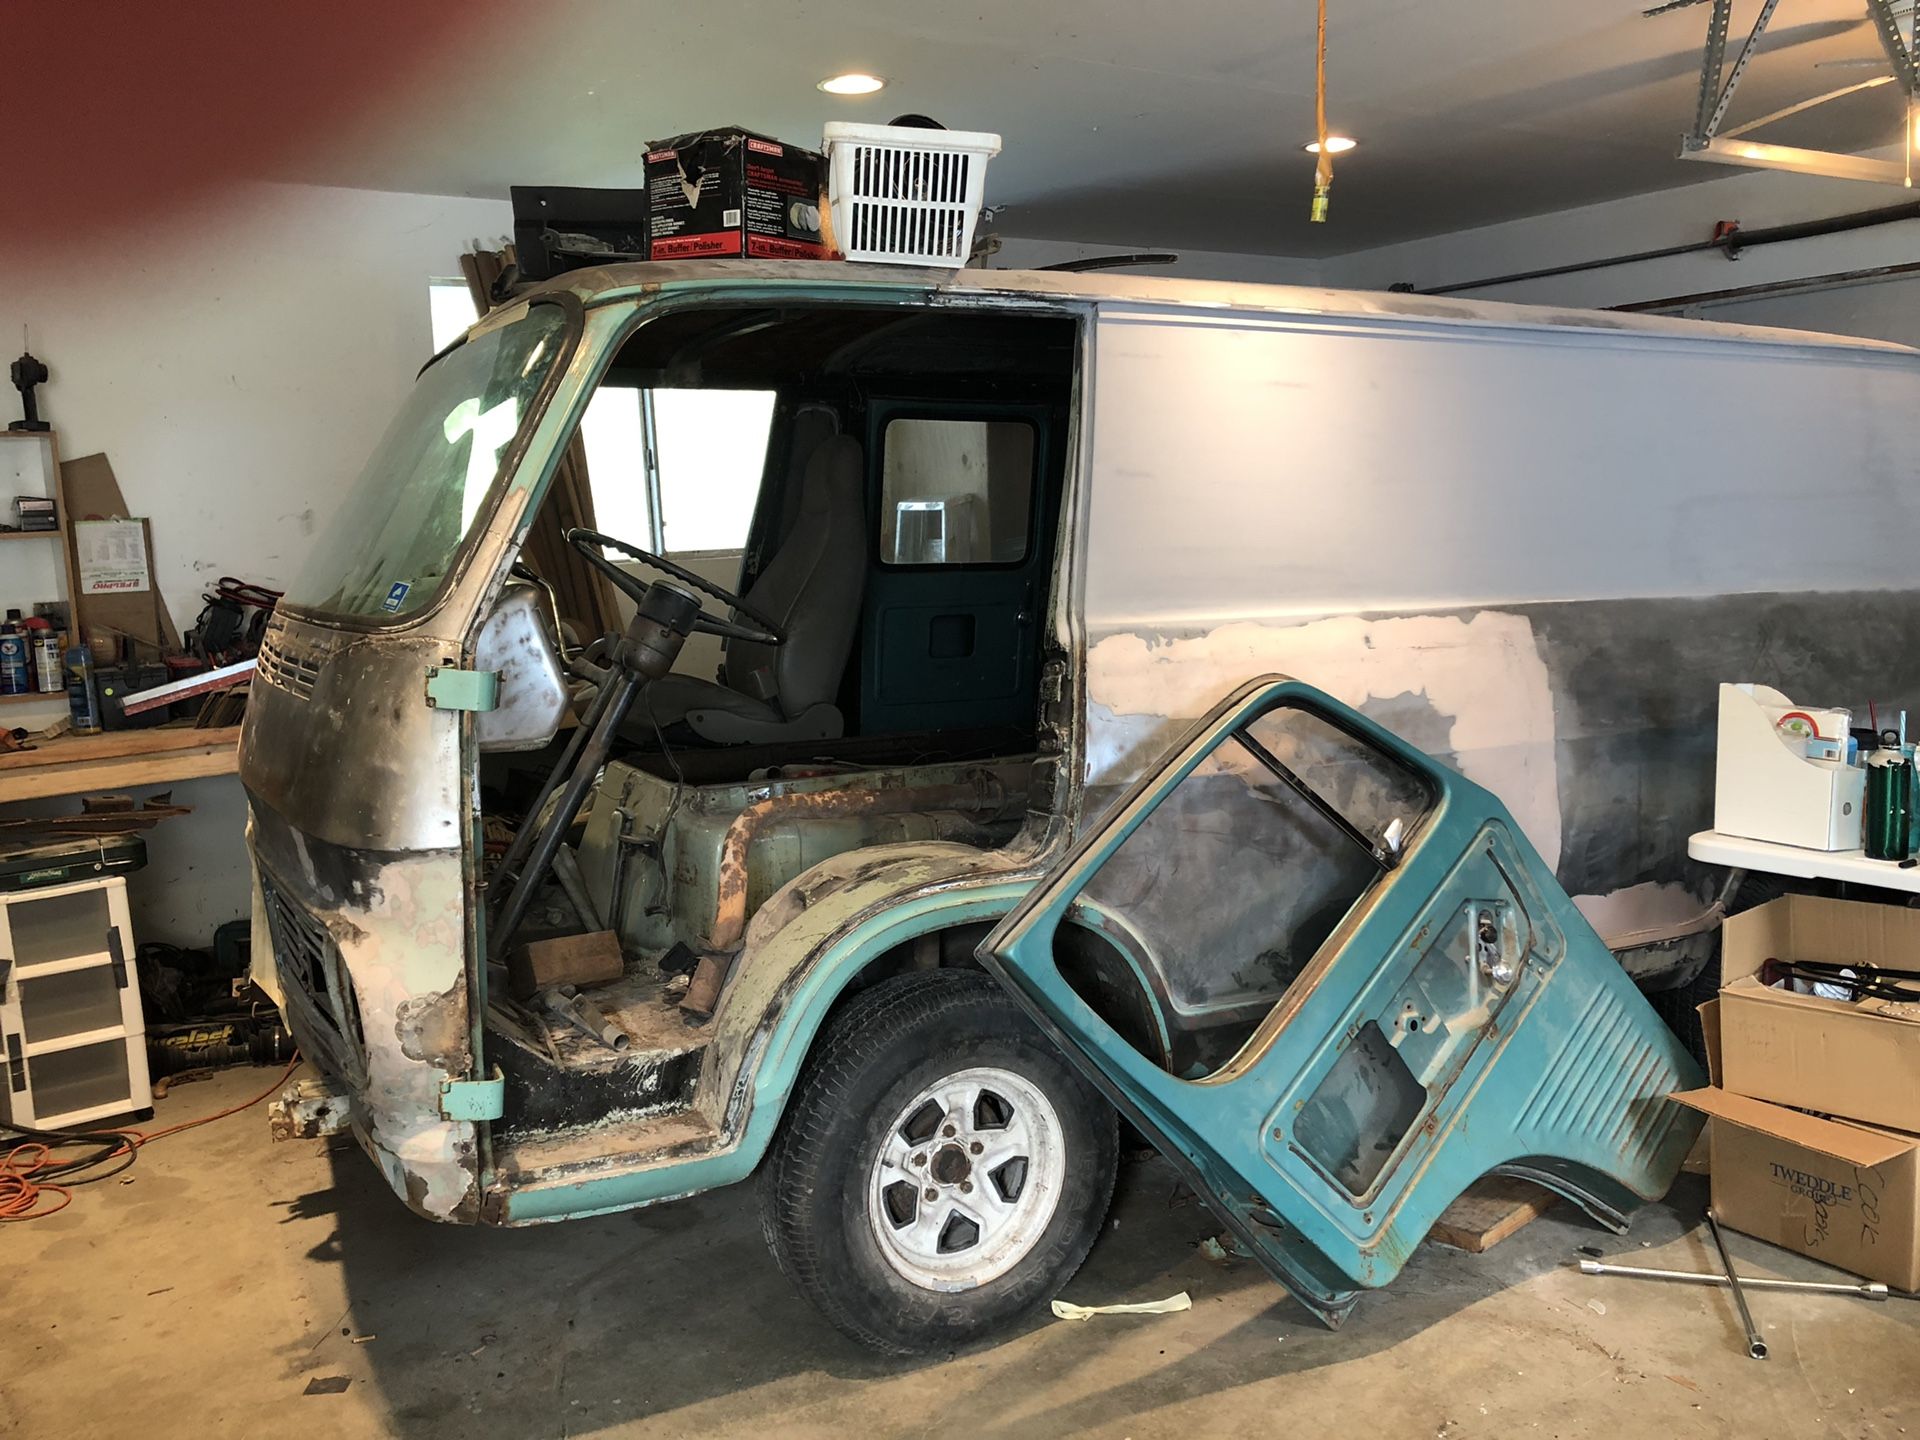 1969 Chevy project van (Please read description)